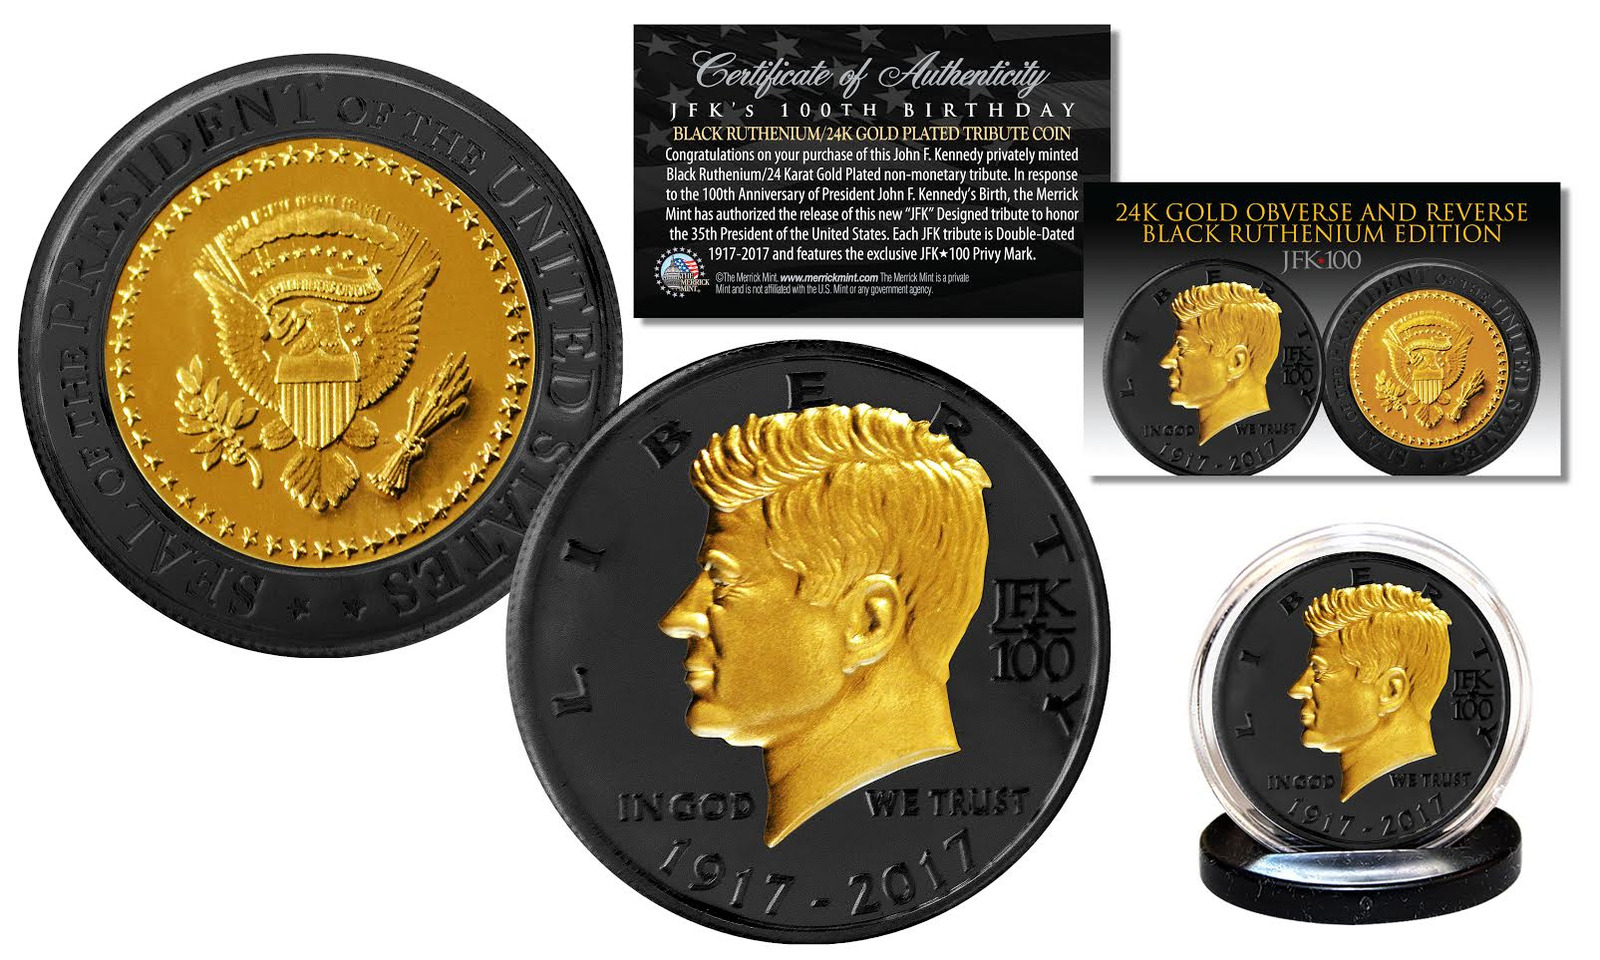 JFK 35th President 100th BDAY CELEBRATION Black Ruthenium & Gold Tribute Coin